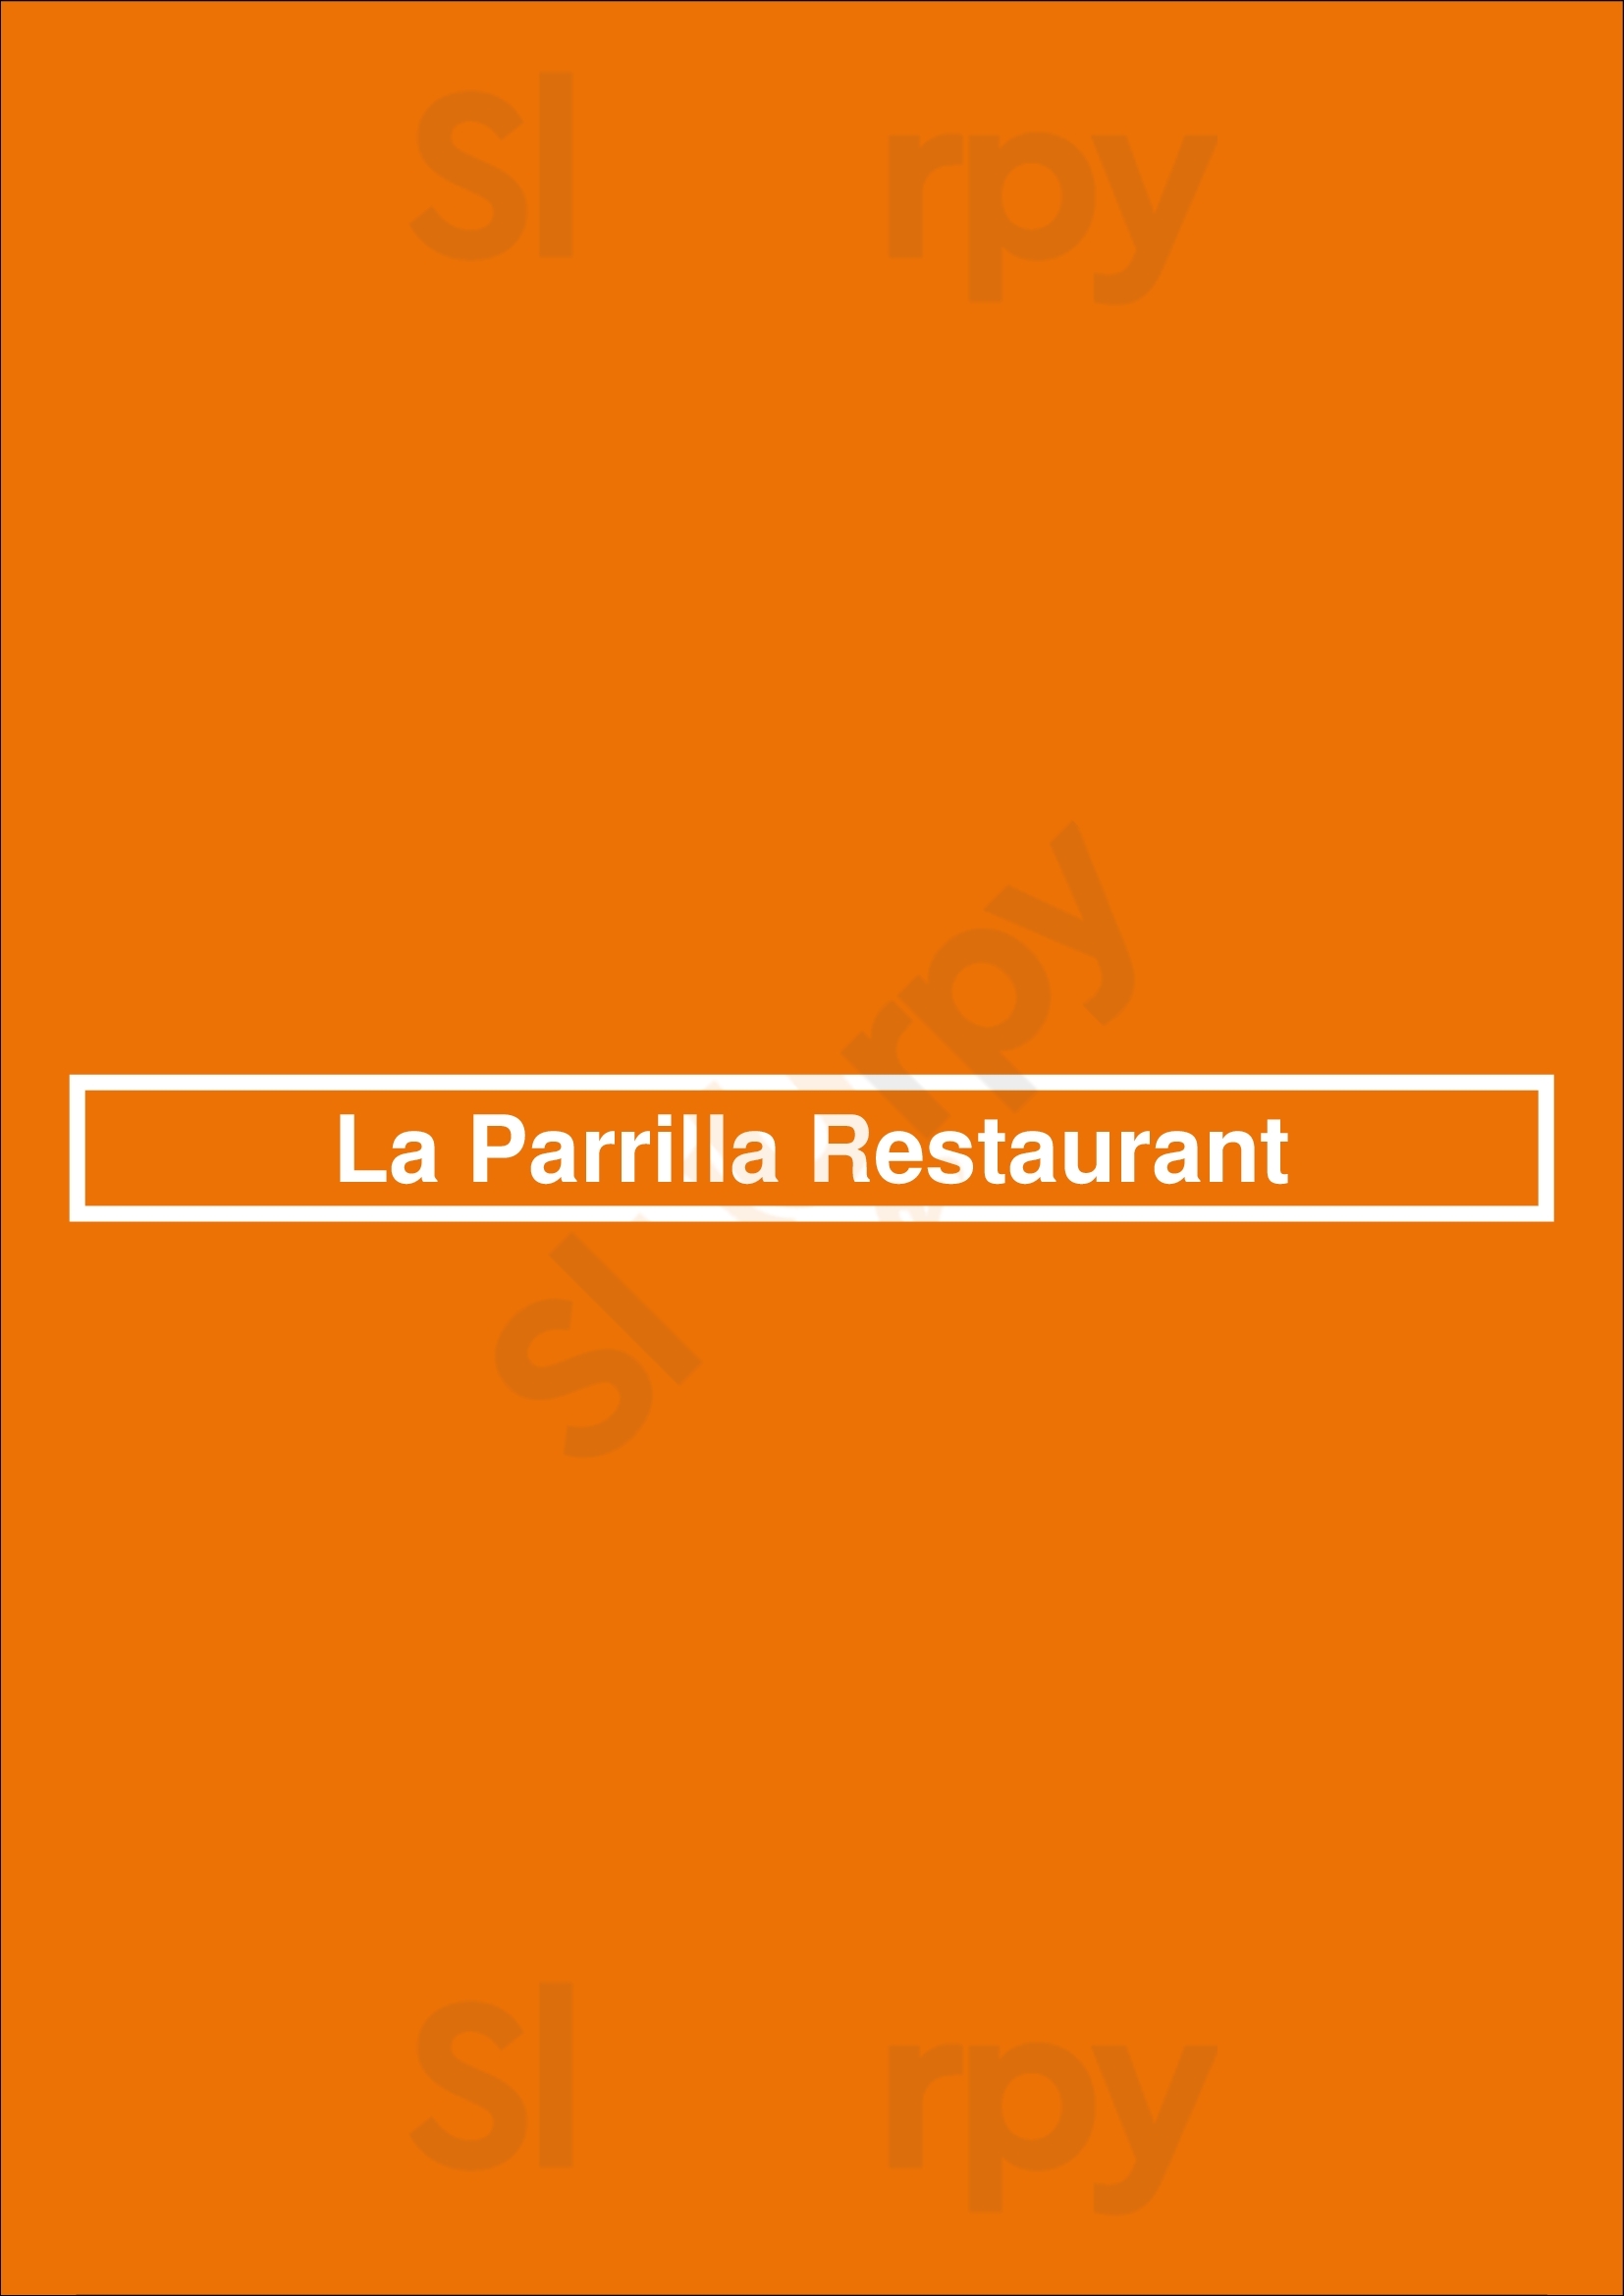 La Parrilla Restaurant Boston Menu - 1